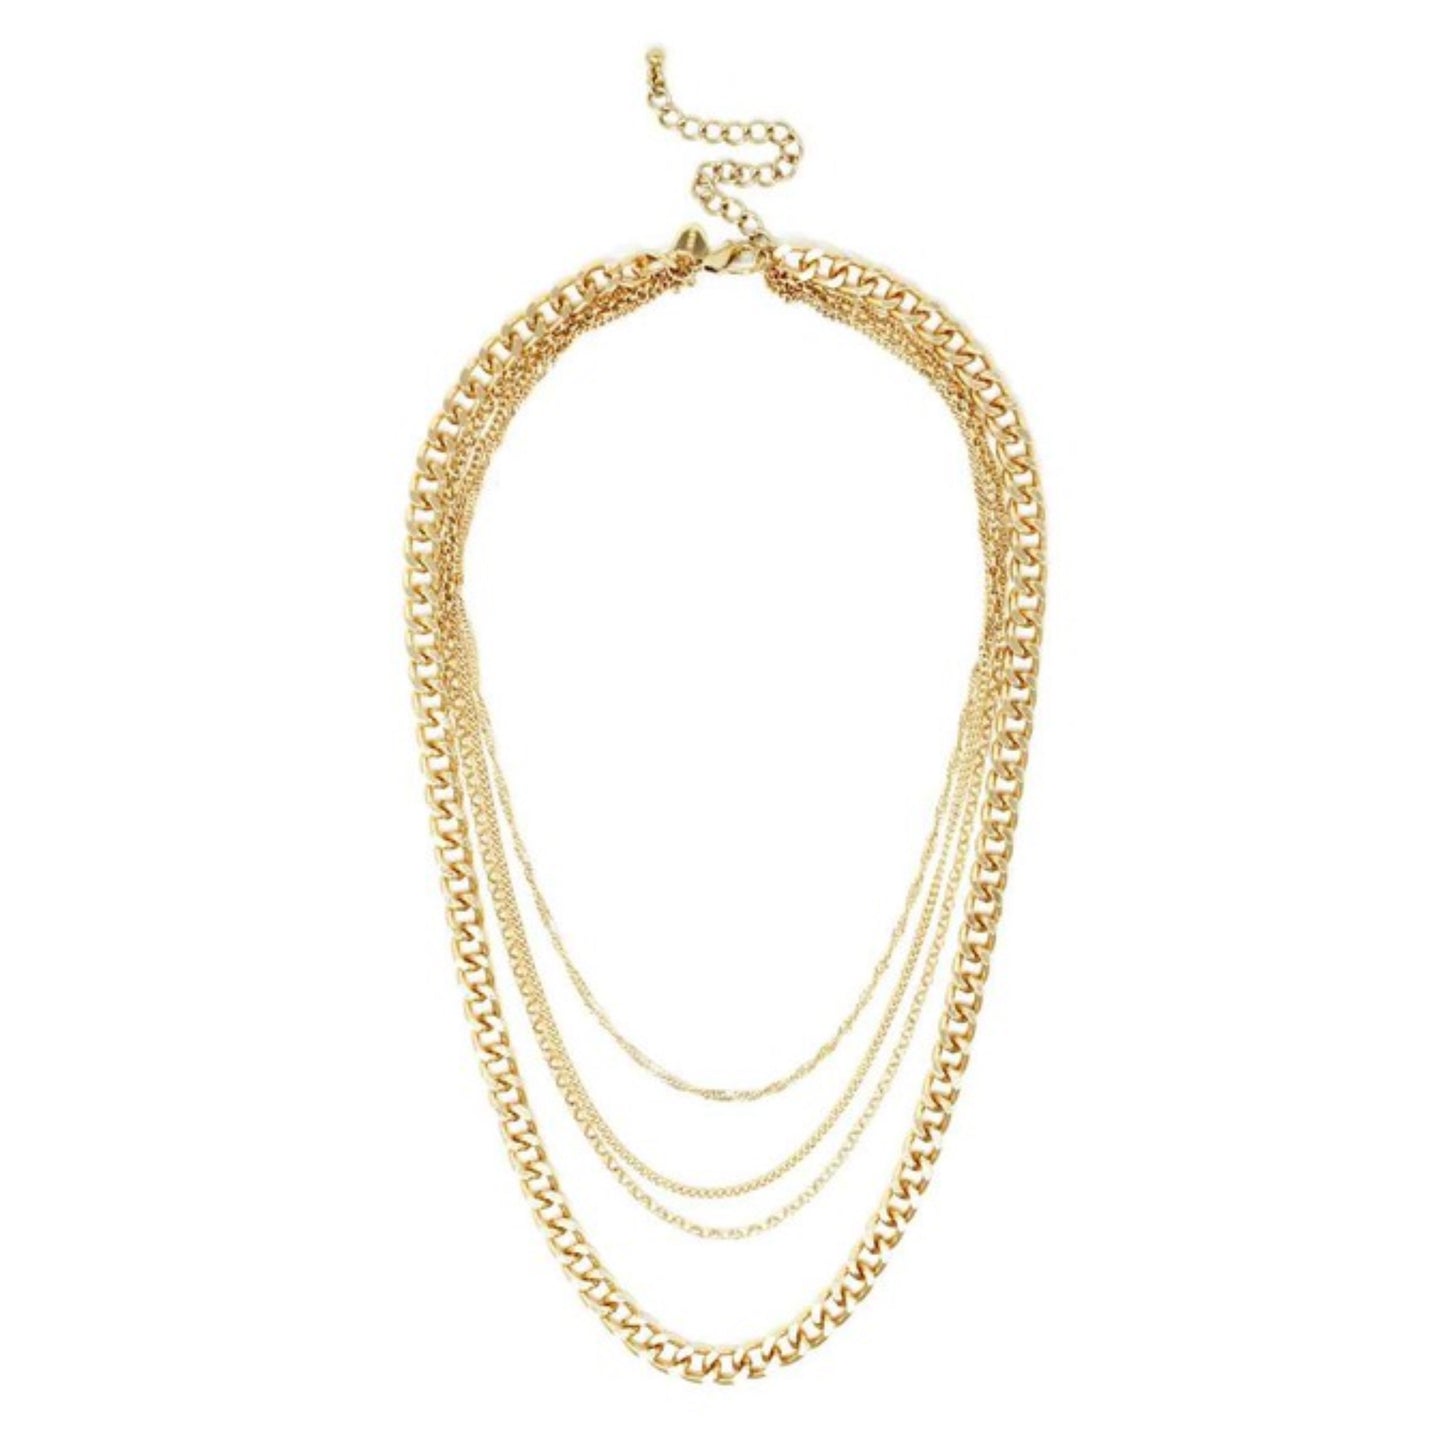 Gold Quad Chain Link Necklace